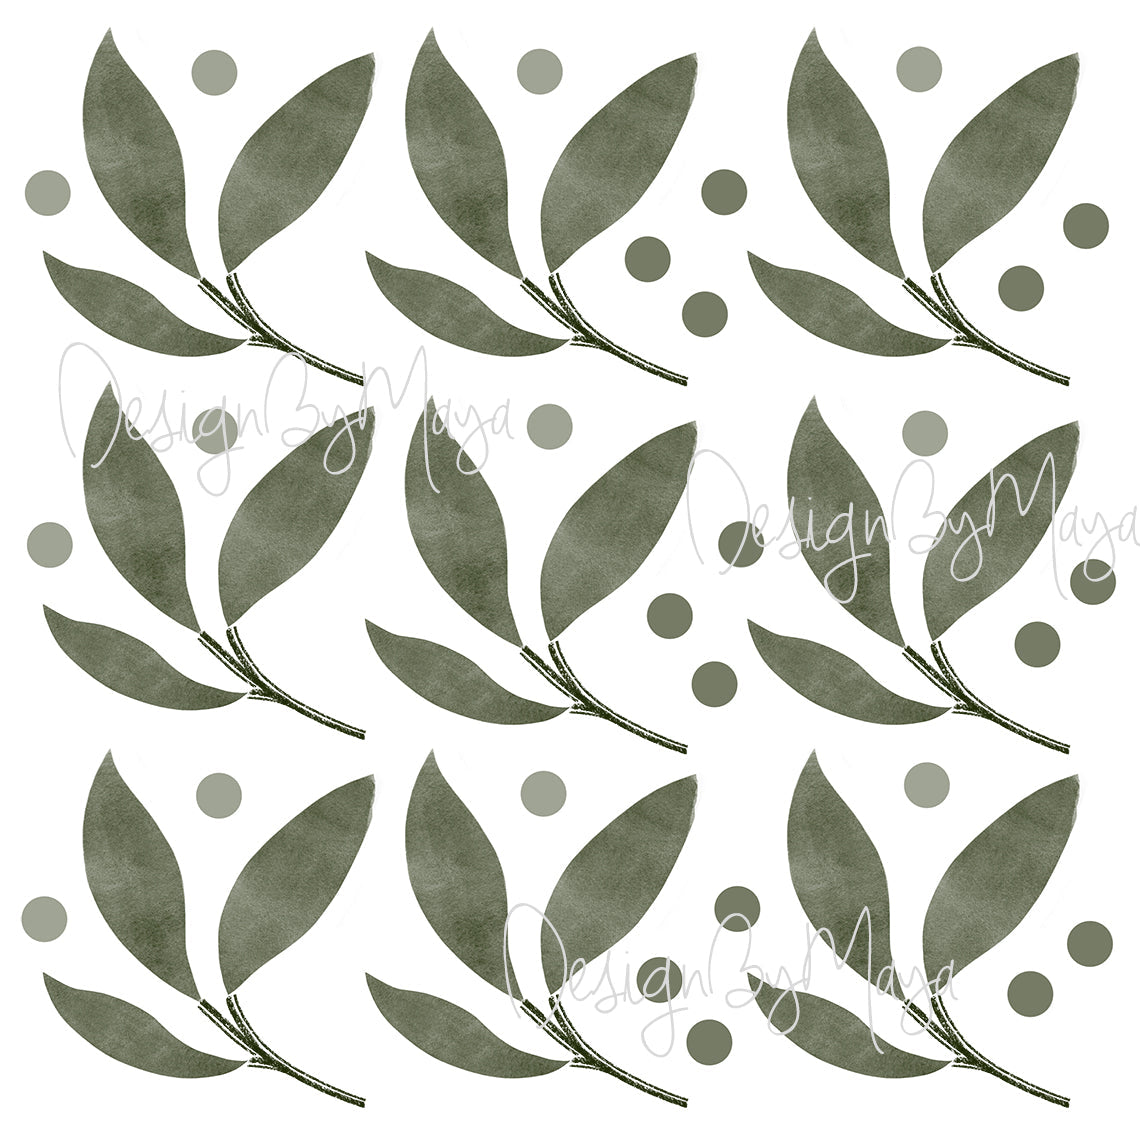 Scandinavian Brown leaves - Fabric Nursery Wall Art Decals